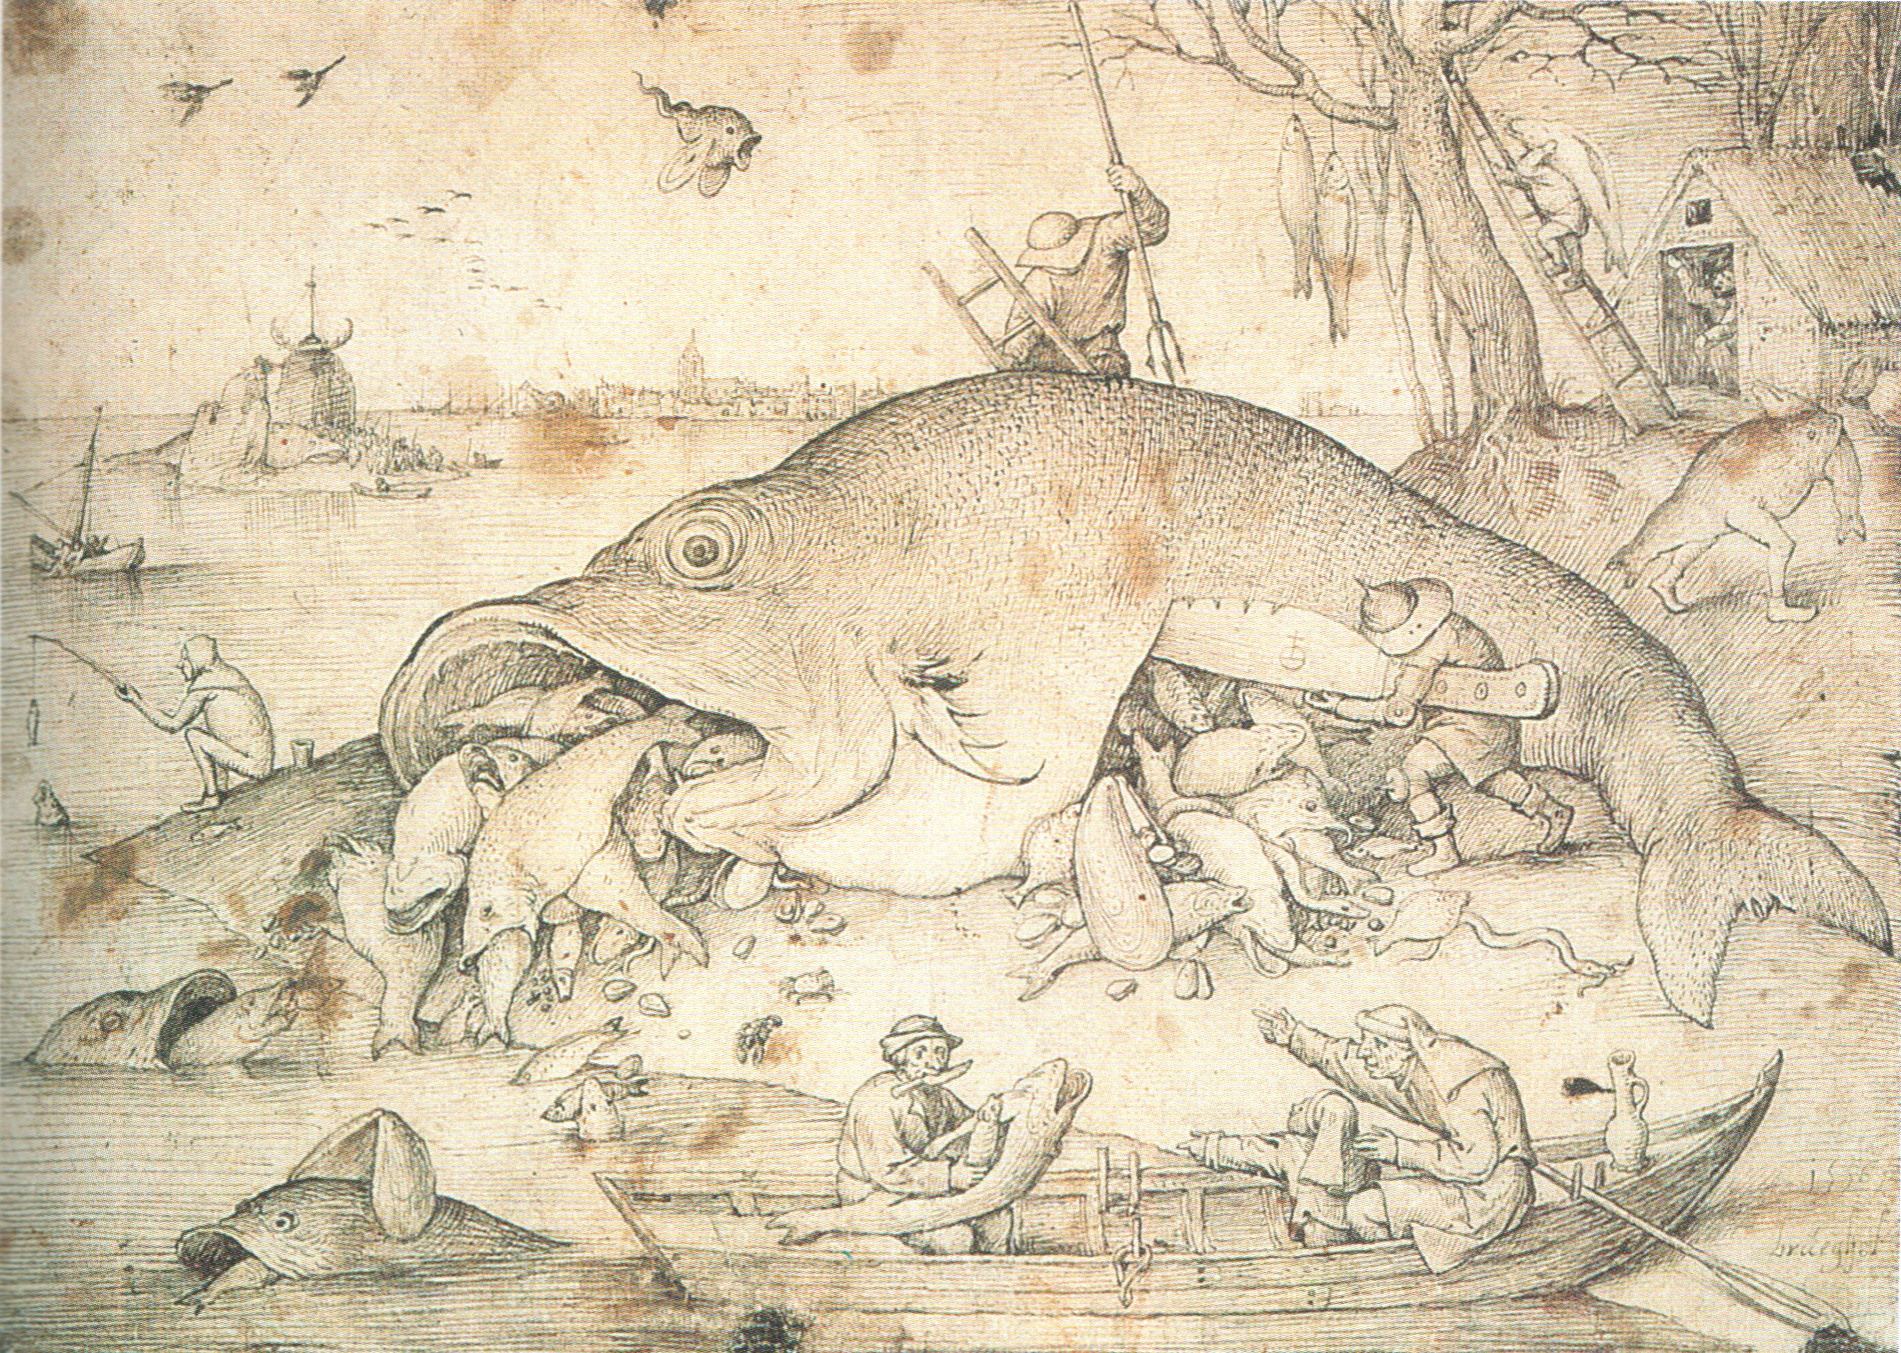 We usually assume that "Big Fish eat Little Fish" (Pieter Bruegel the Elder 1556)